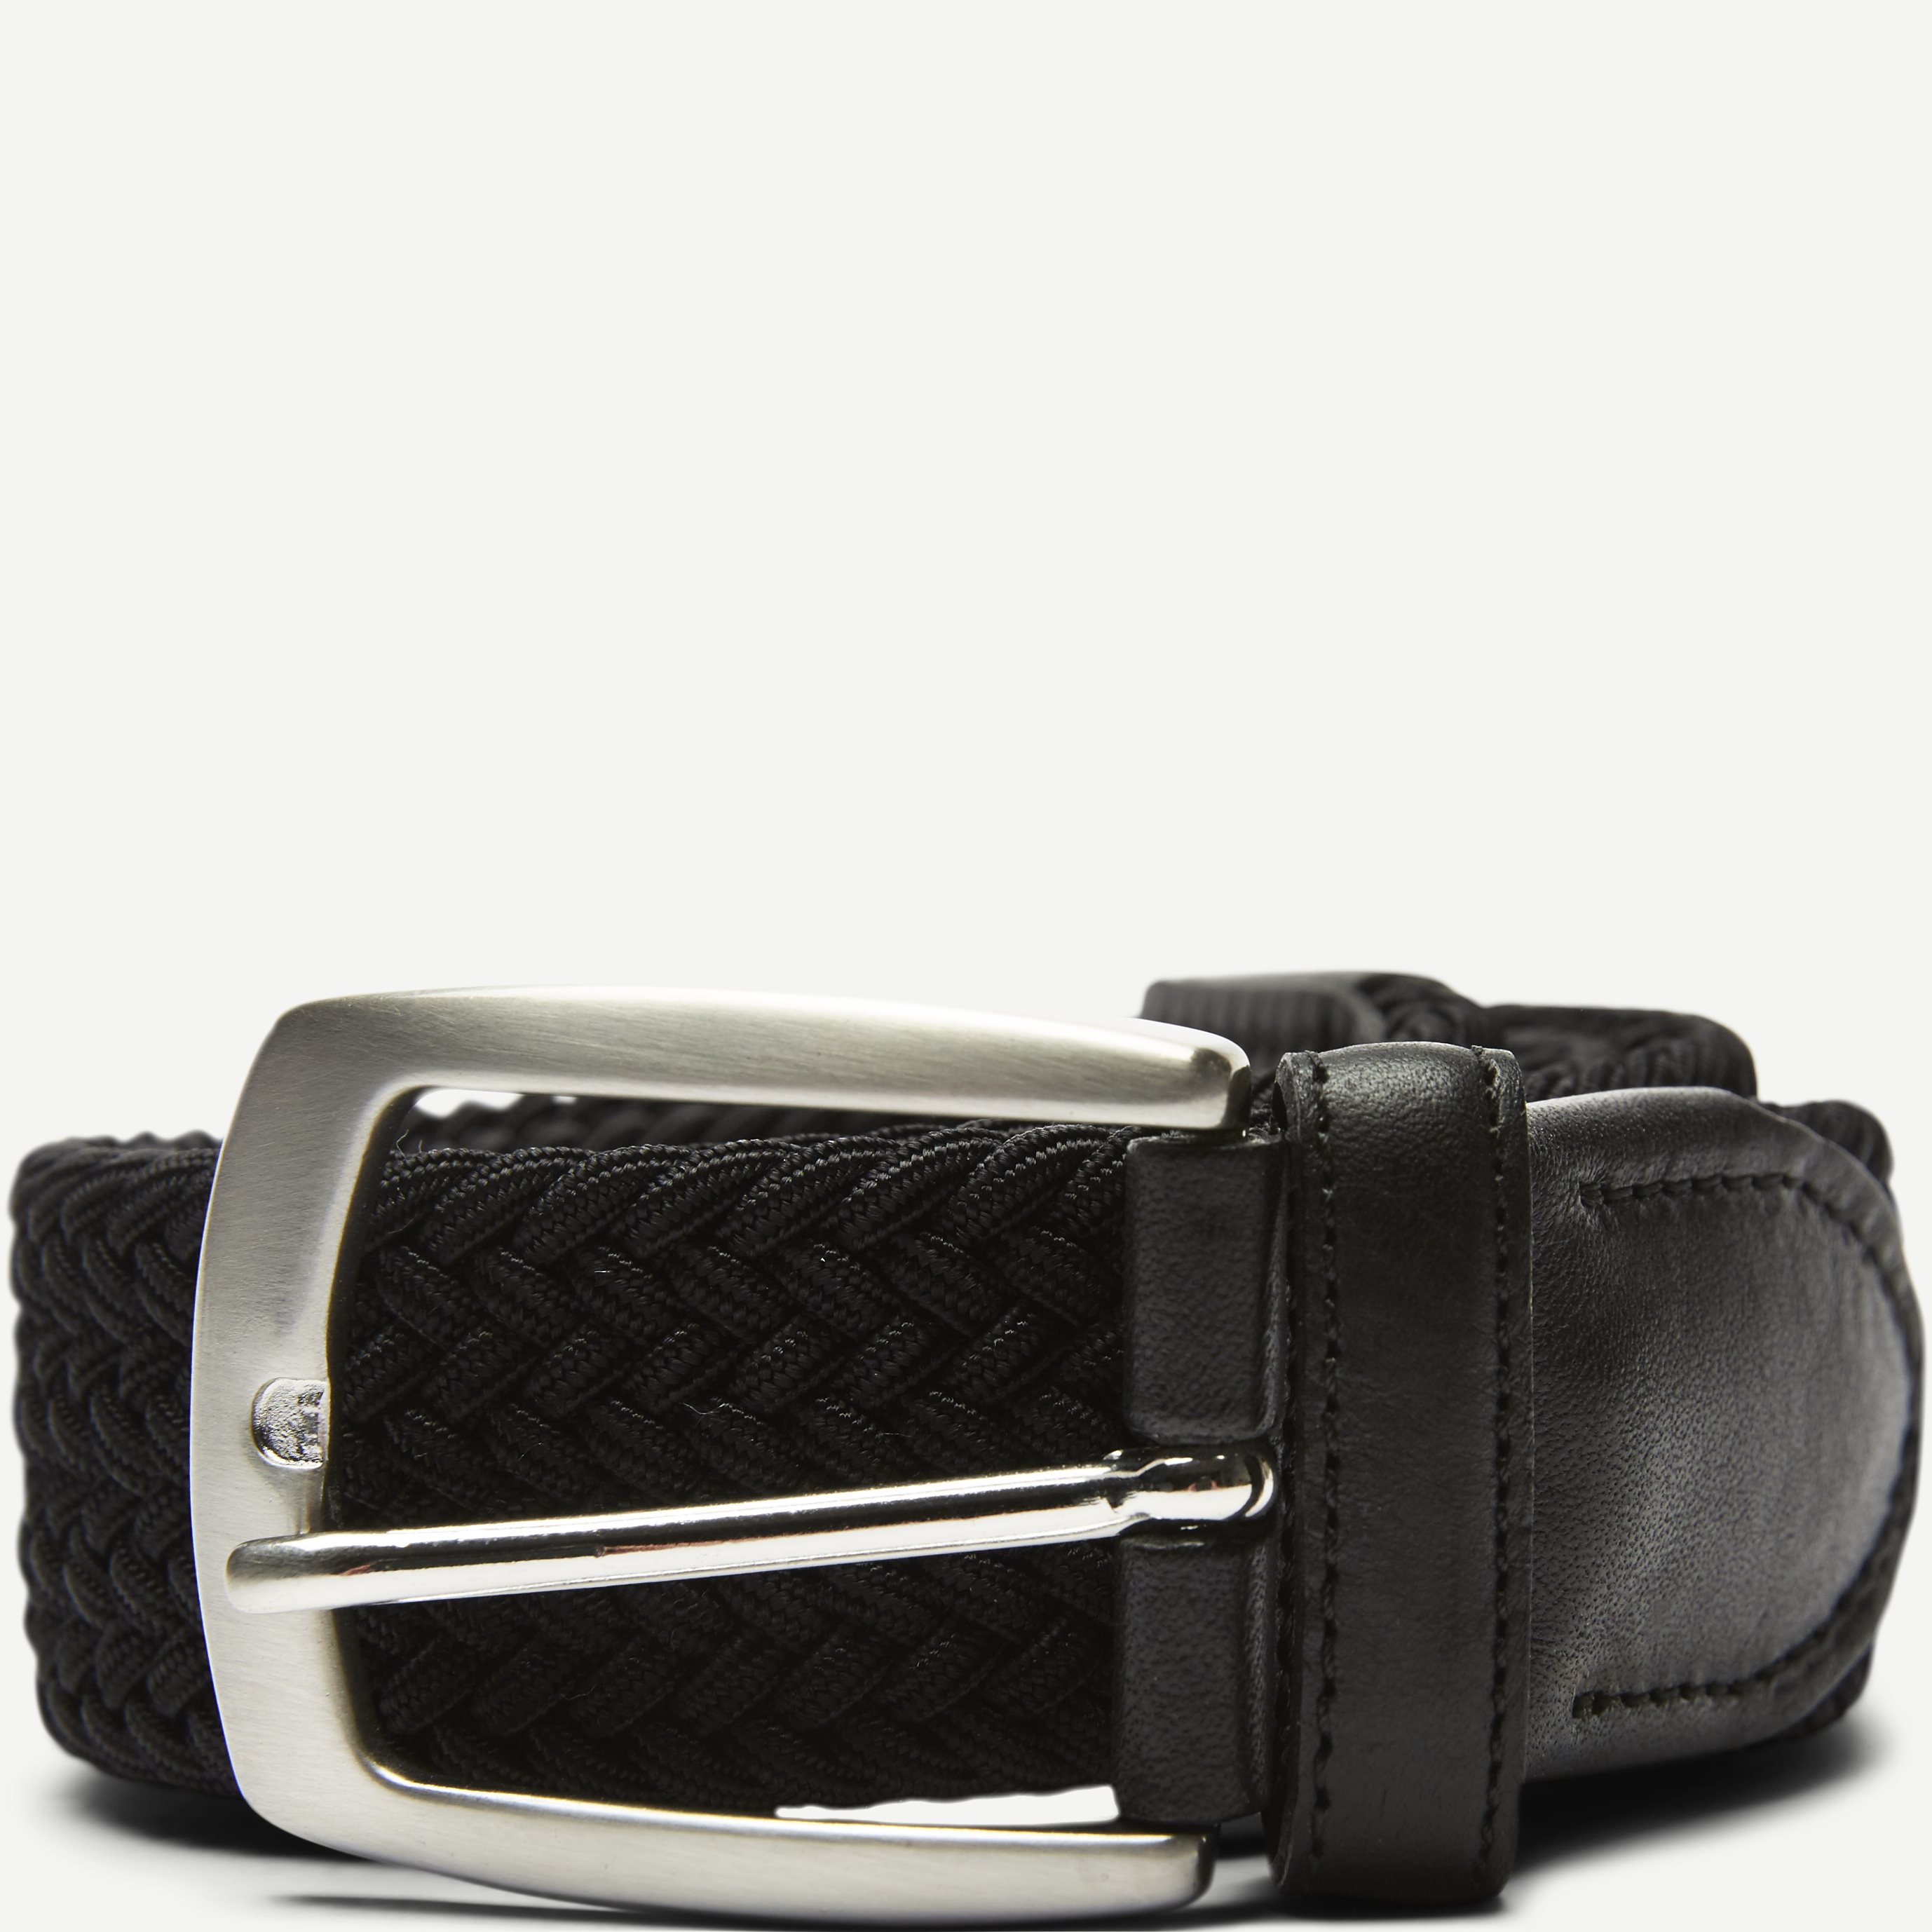 Philipsons Belts 17060 Black